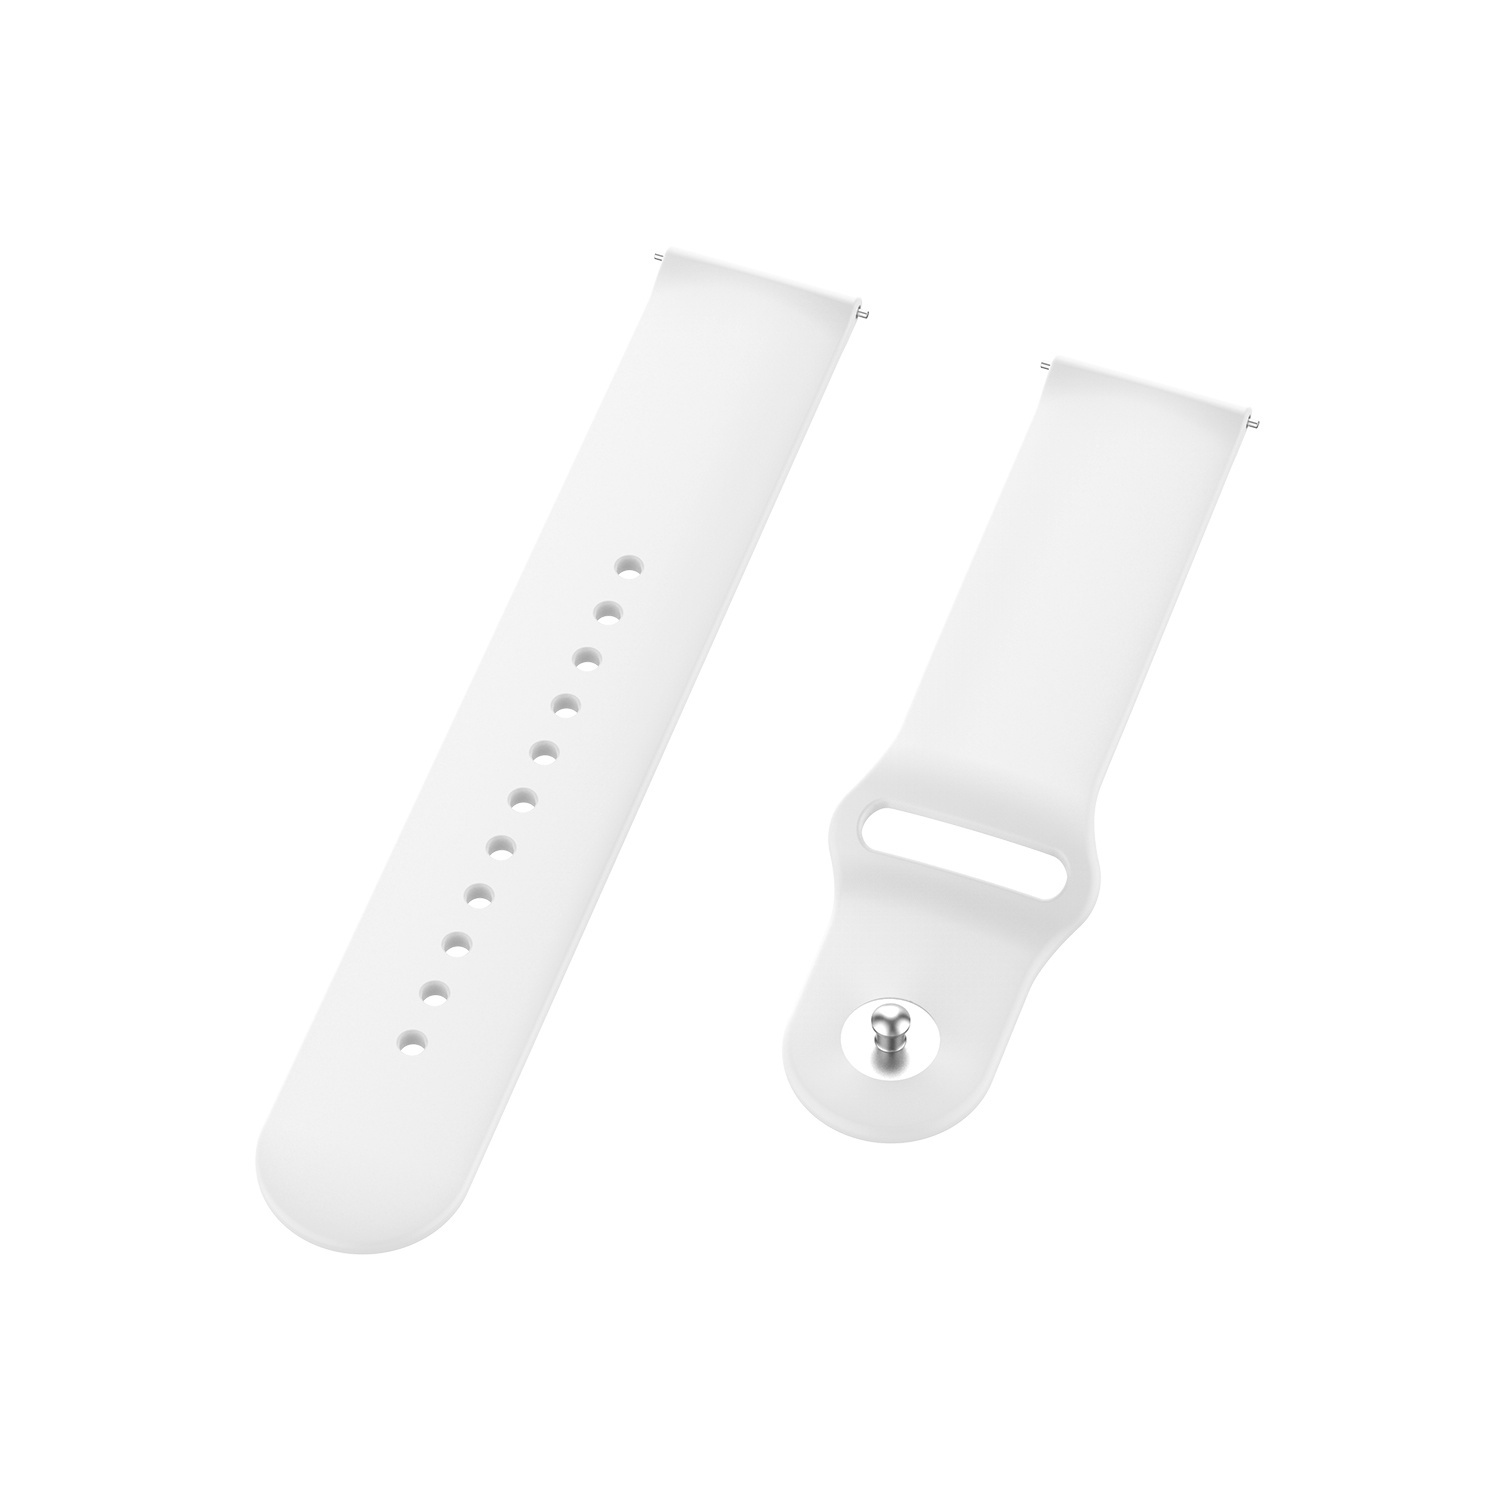 Cinturino sport in silicone per Samsung Galaxy Watch - bianco